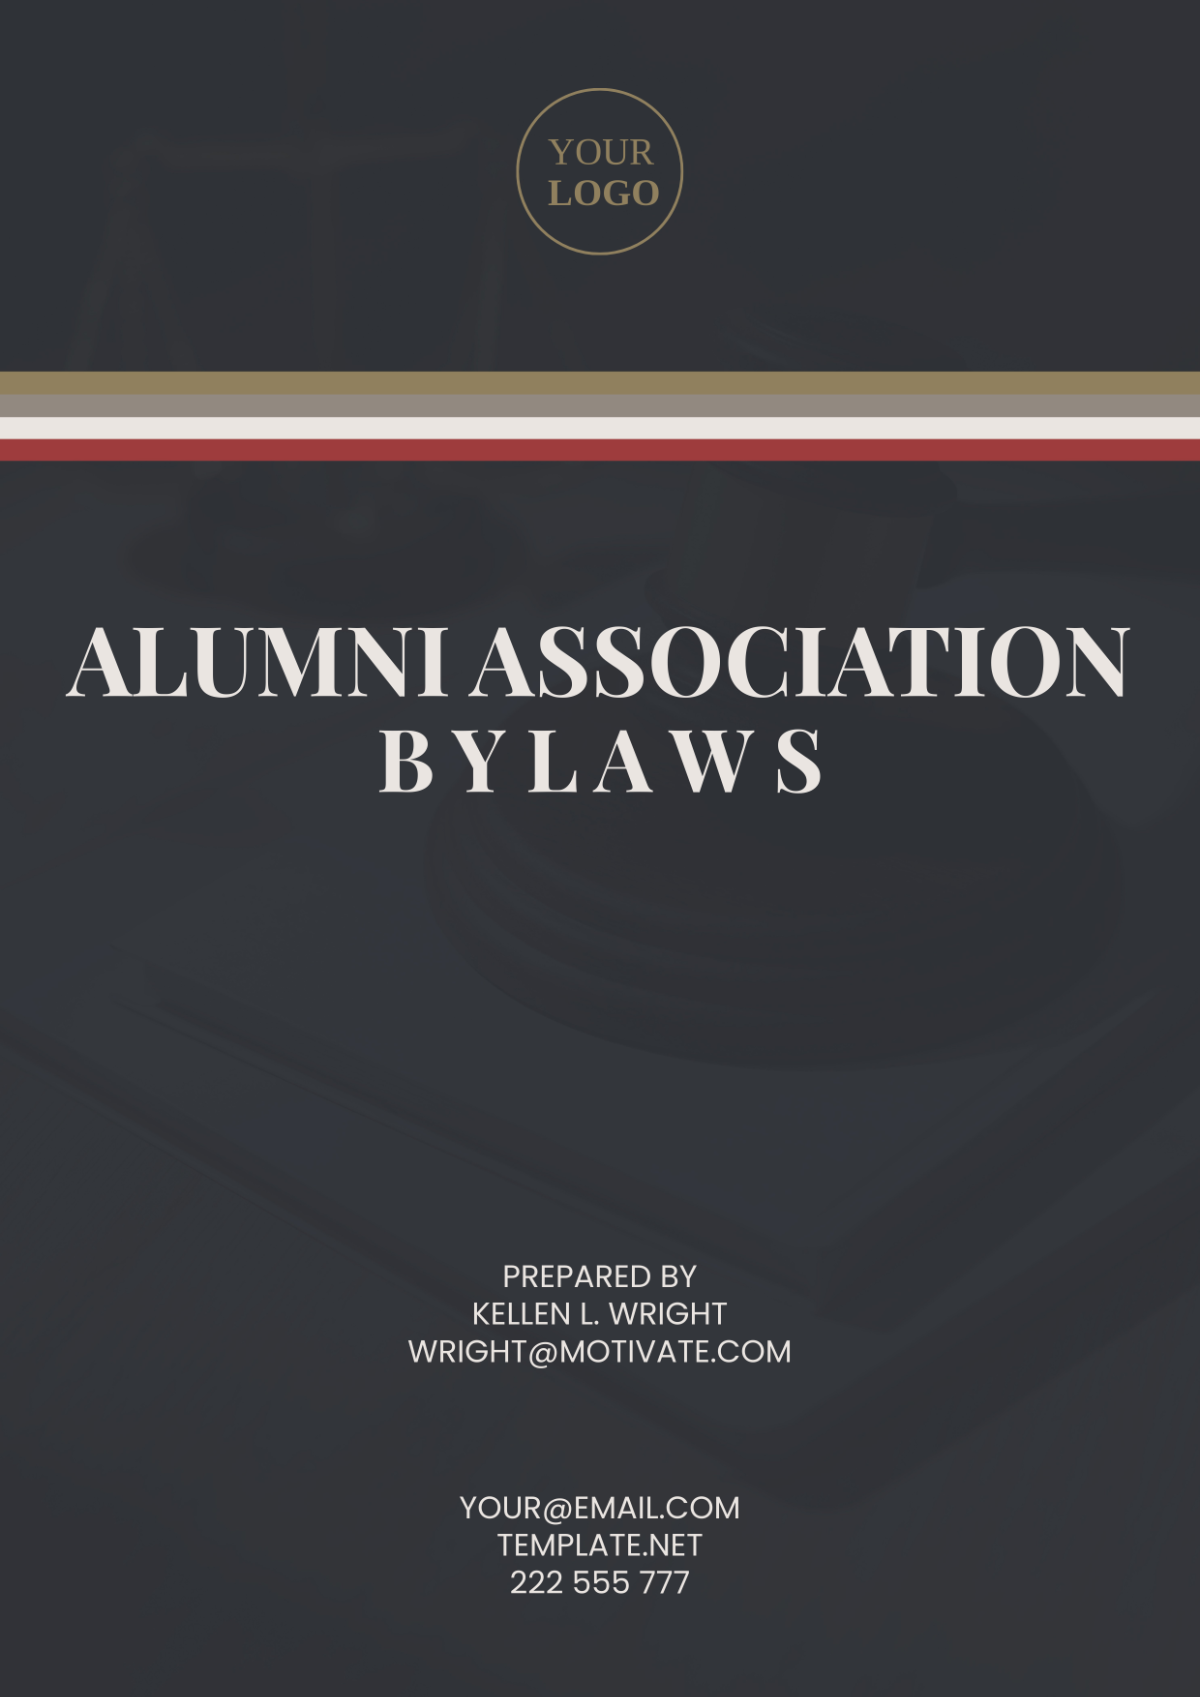 Alumni Association Bylaws Template